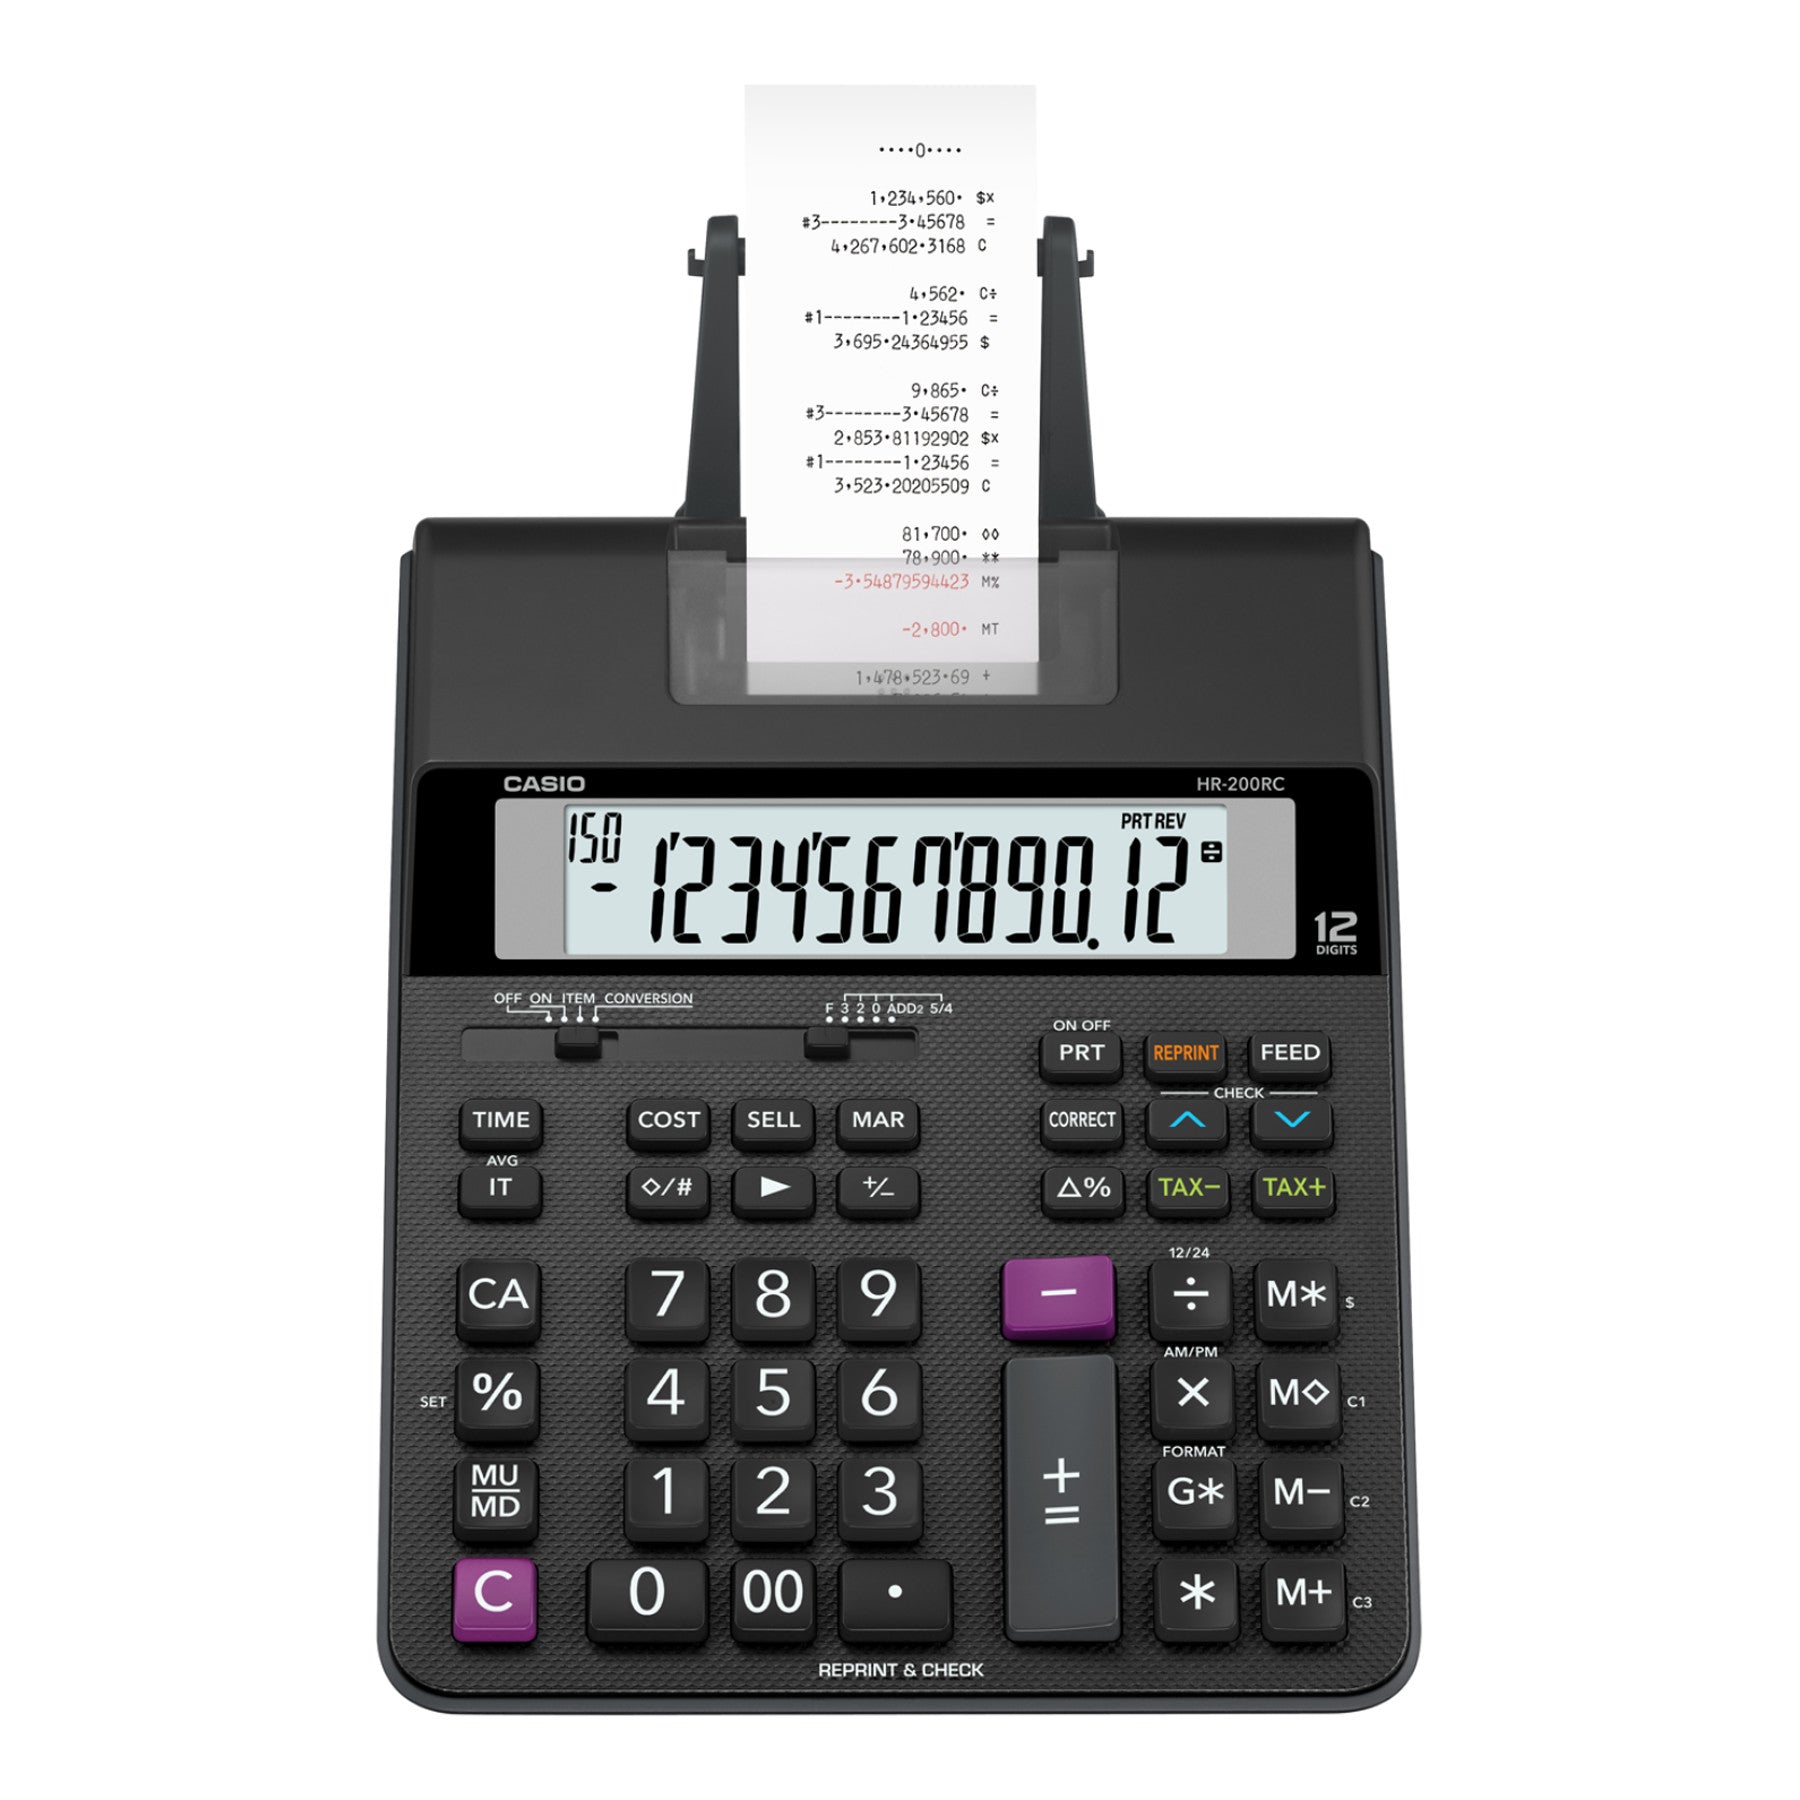 hr200rc-printing-calculator-black-red-print-24-lines-sec_csohr200rc - 1